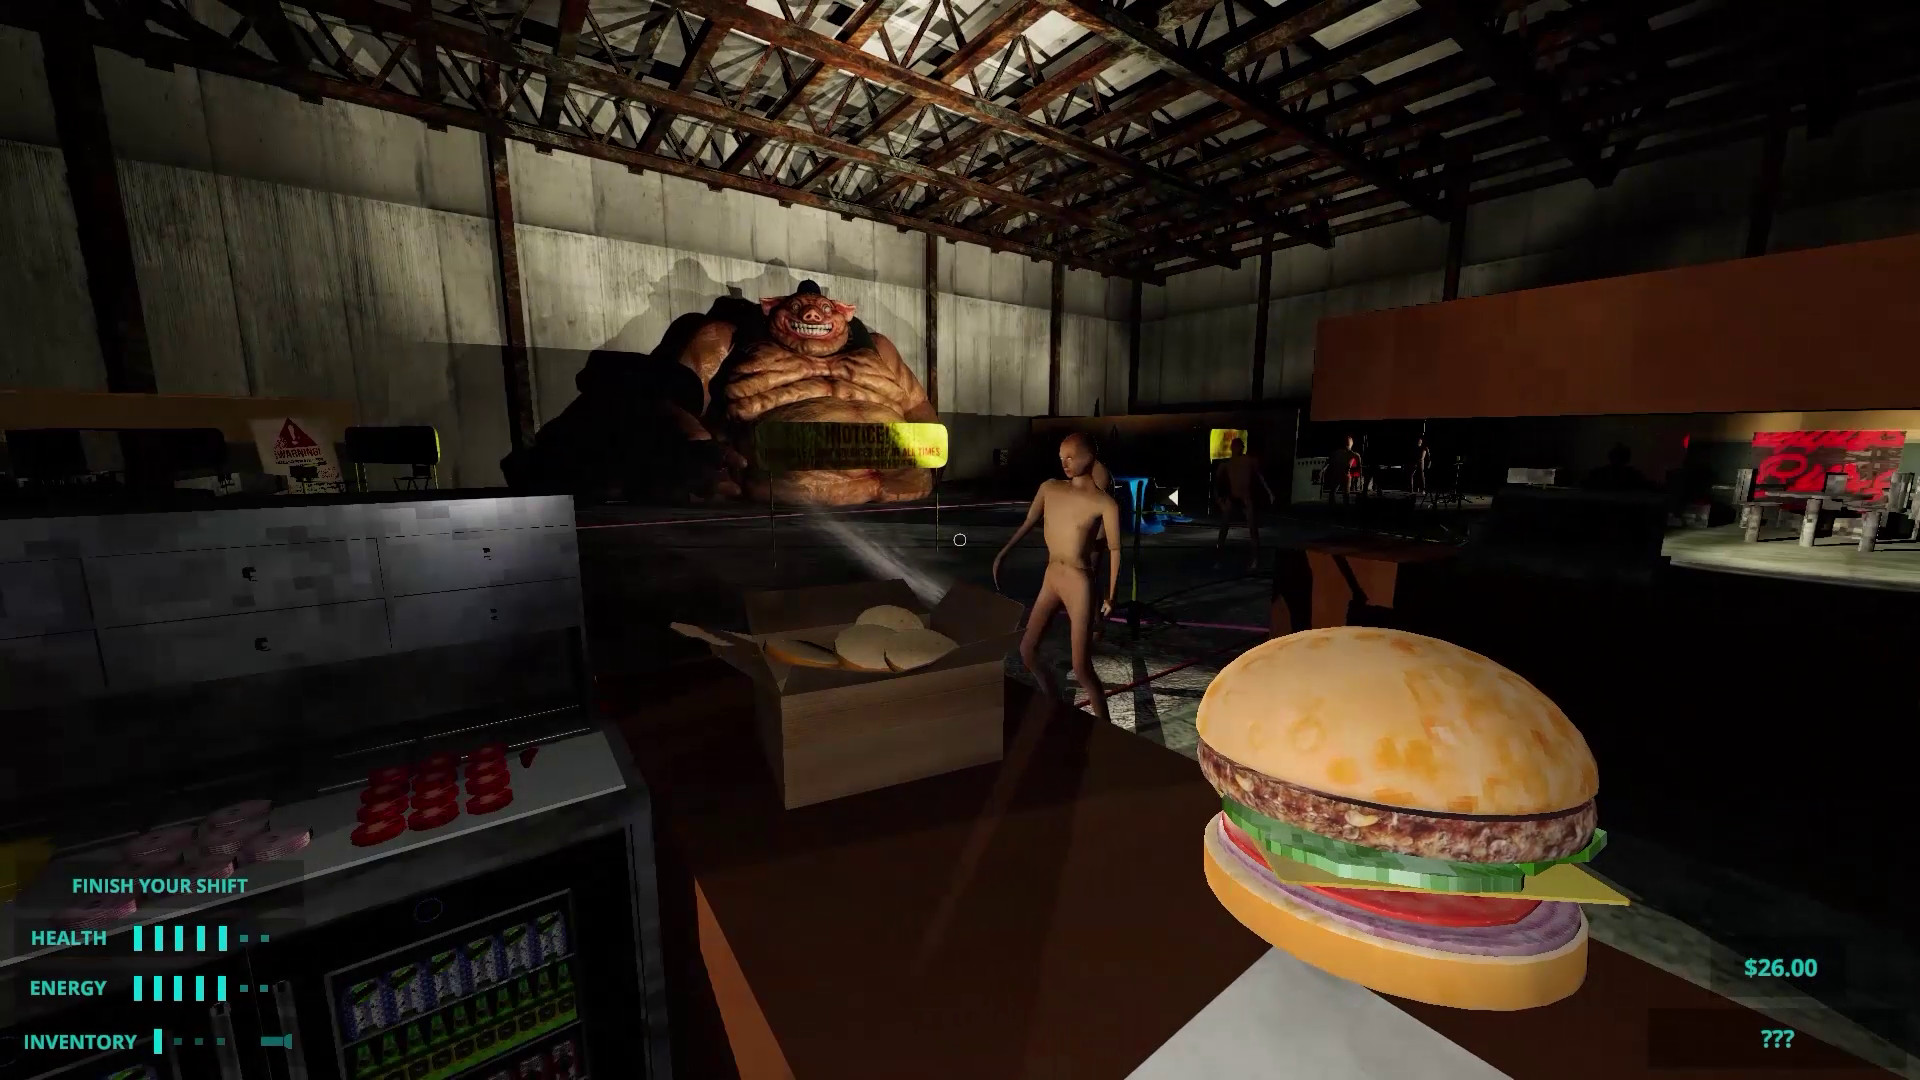 Comprar Happy's Humble Burger Farm – Jogo completo (Steam) com